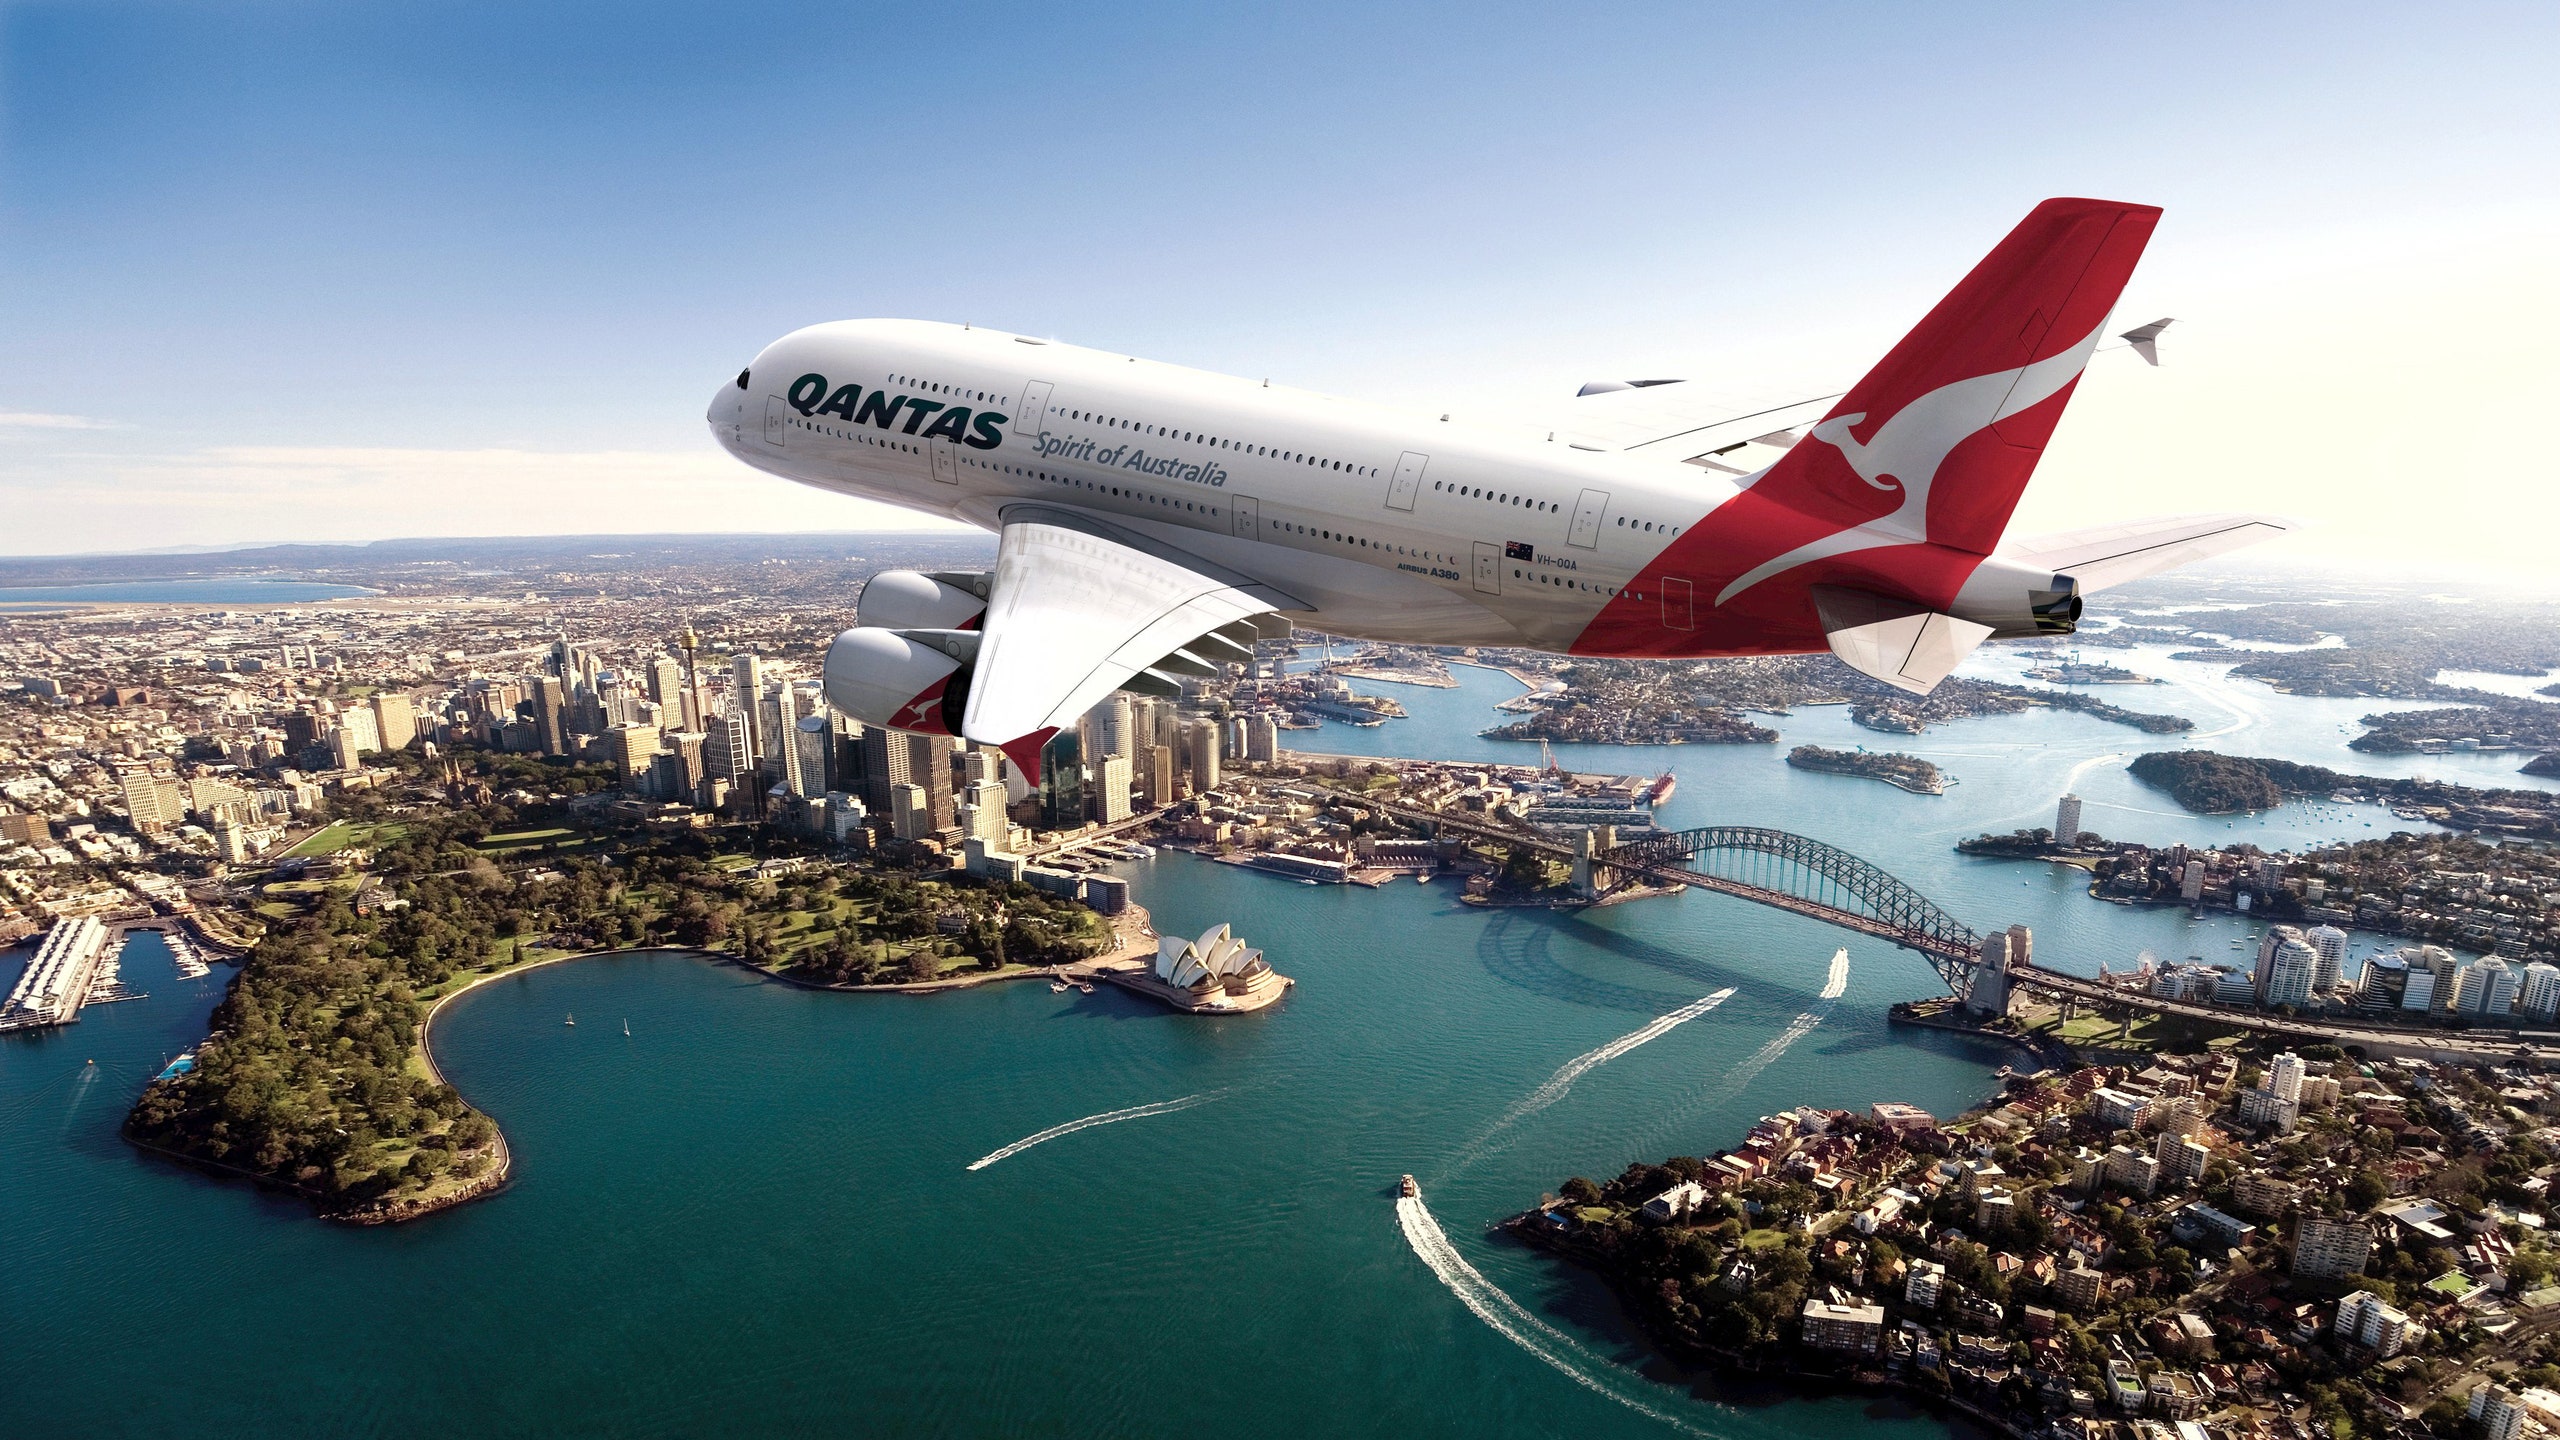 Qantas adds more London flights as Australians rush to return home for Christmas